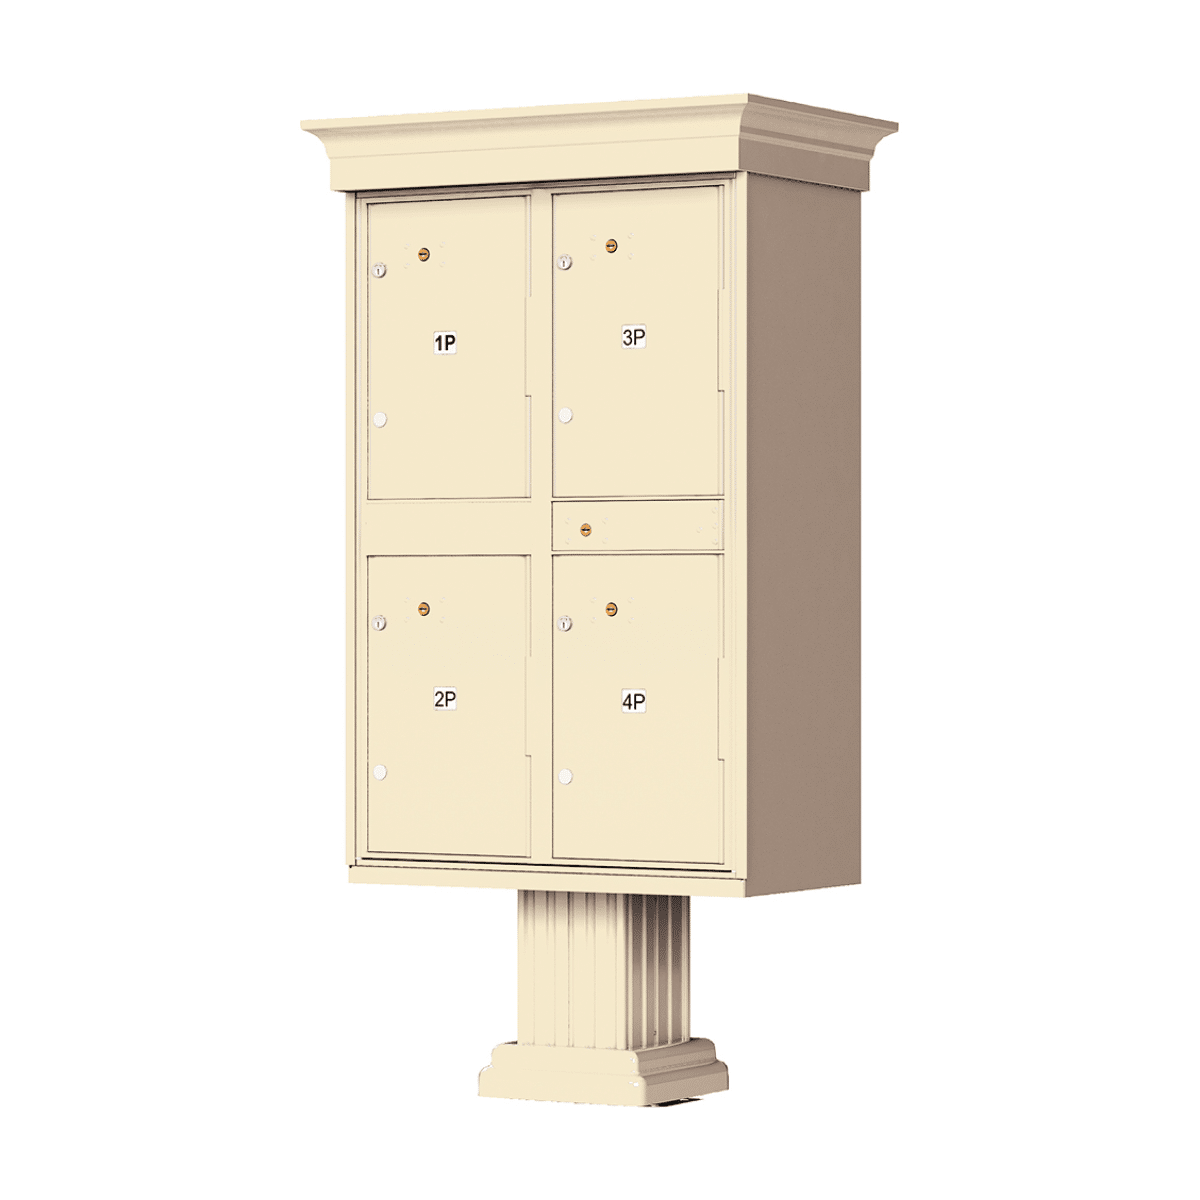 Florence CBU Cluster Mailbox – Vogue Classic Kit, 4 Parcel Lockers Product Image